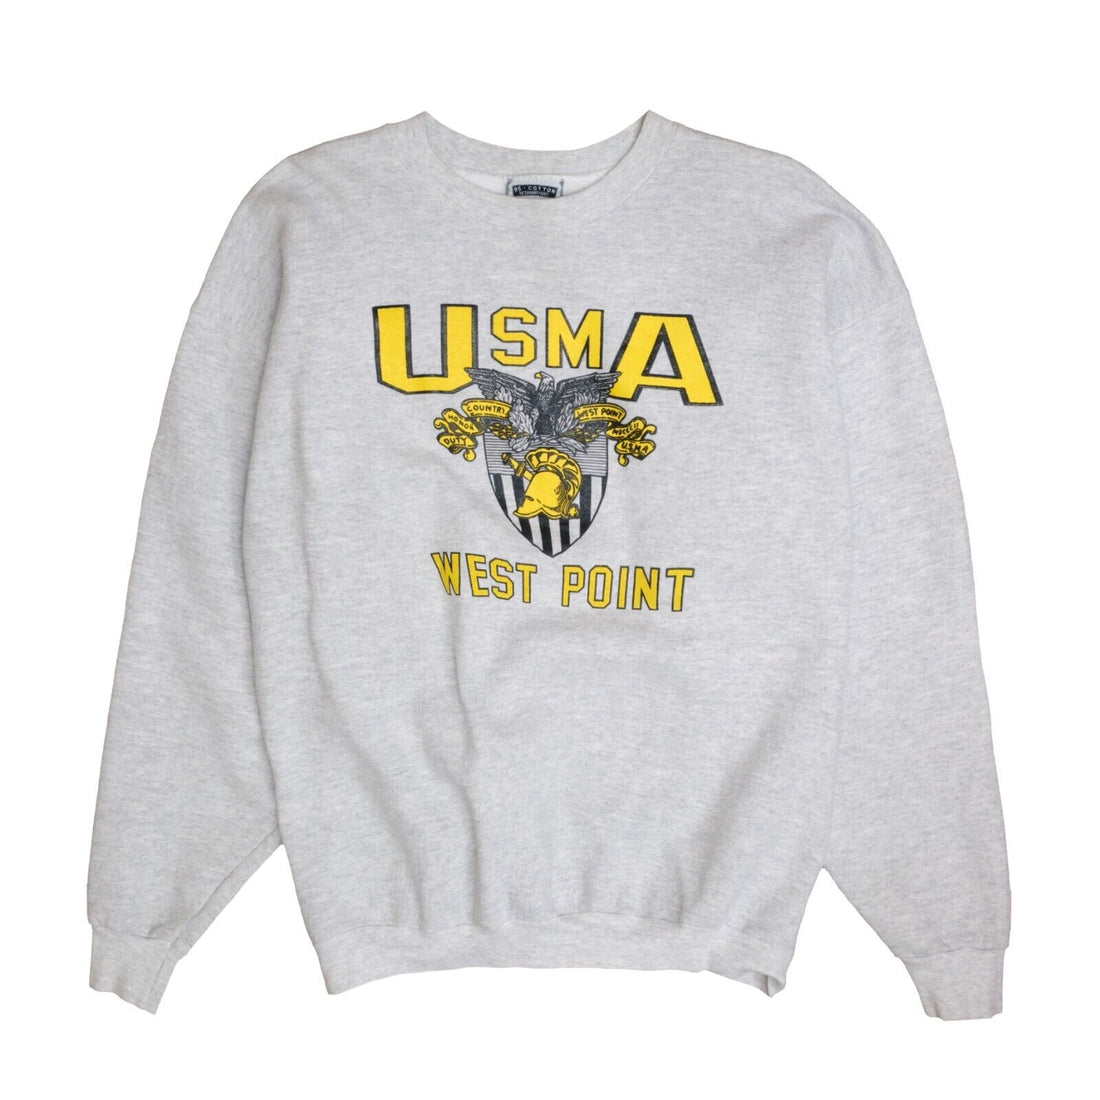 Vintage USMA West Point Sweatshirt Crewneck Size Large Gray 90s